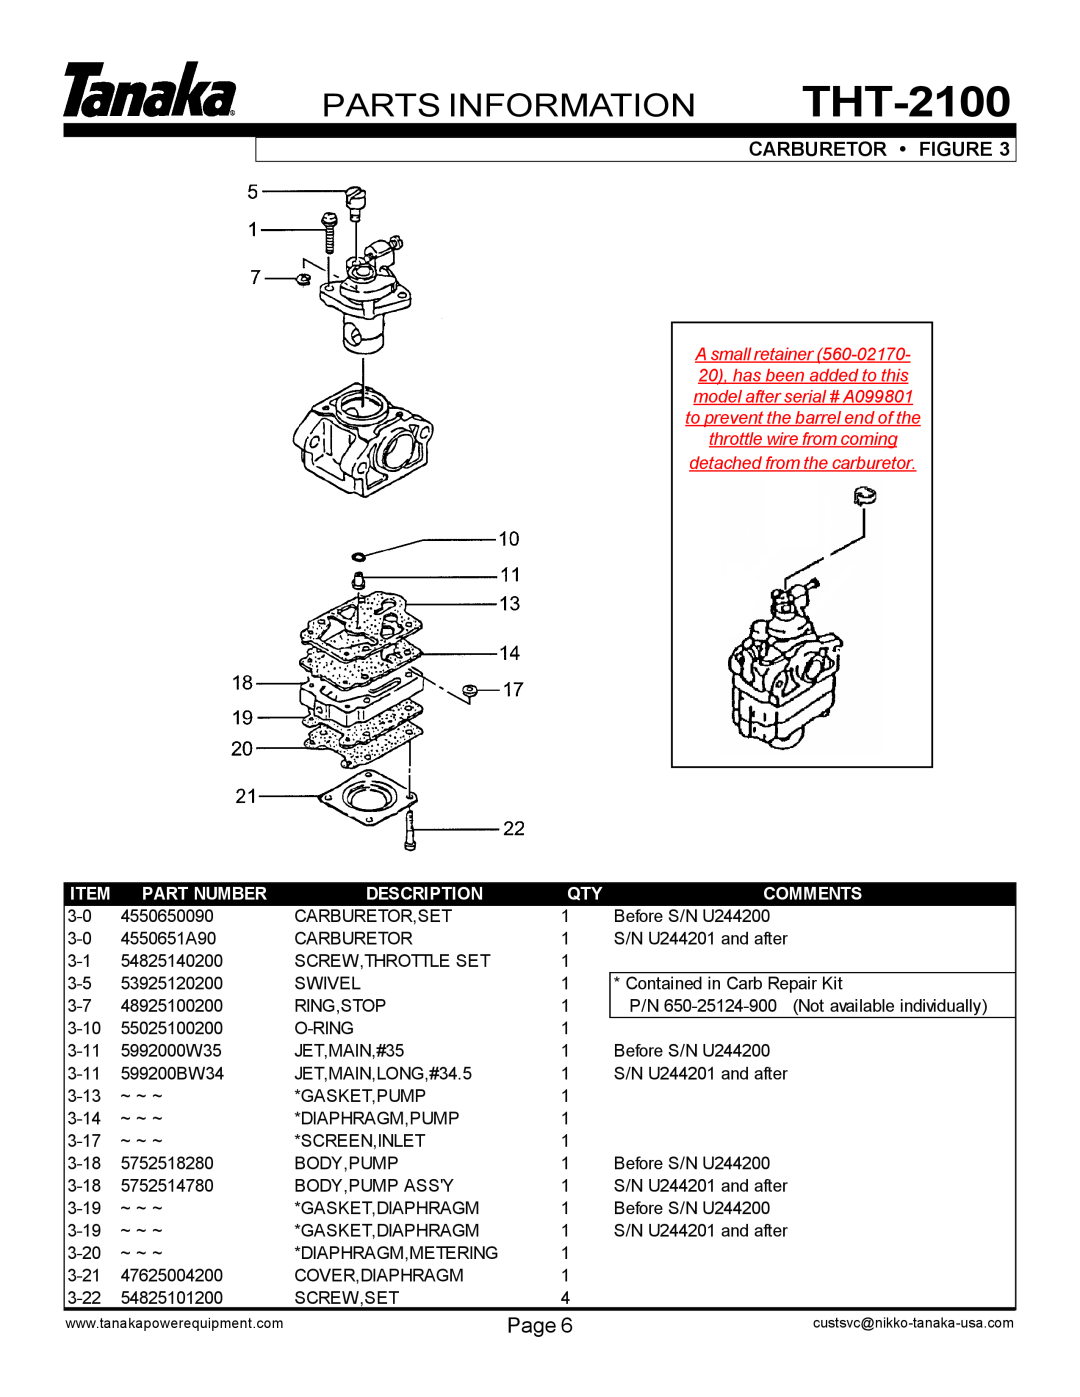 Tanaka Parts Information, THT-2100, Carburetor Figure, detached from the carburetor, Part Number, Description, Comments 